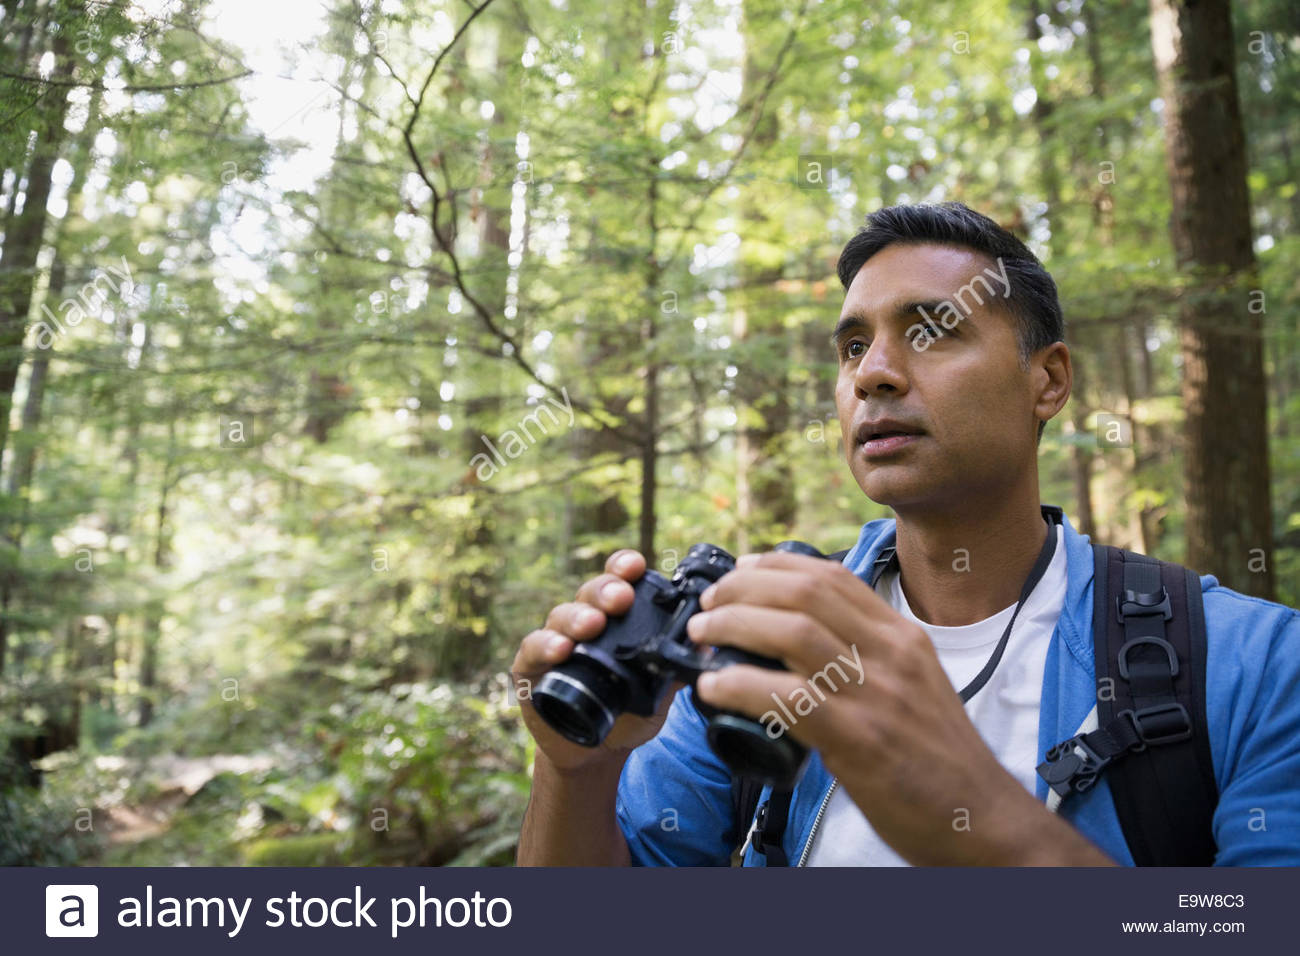 Man with binoculars in woods Stock Photo